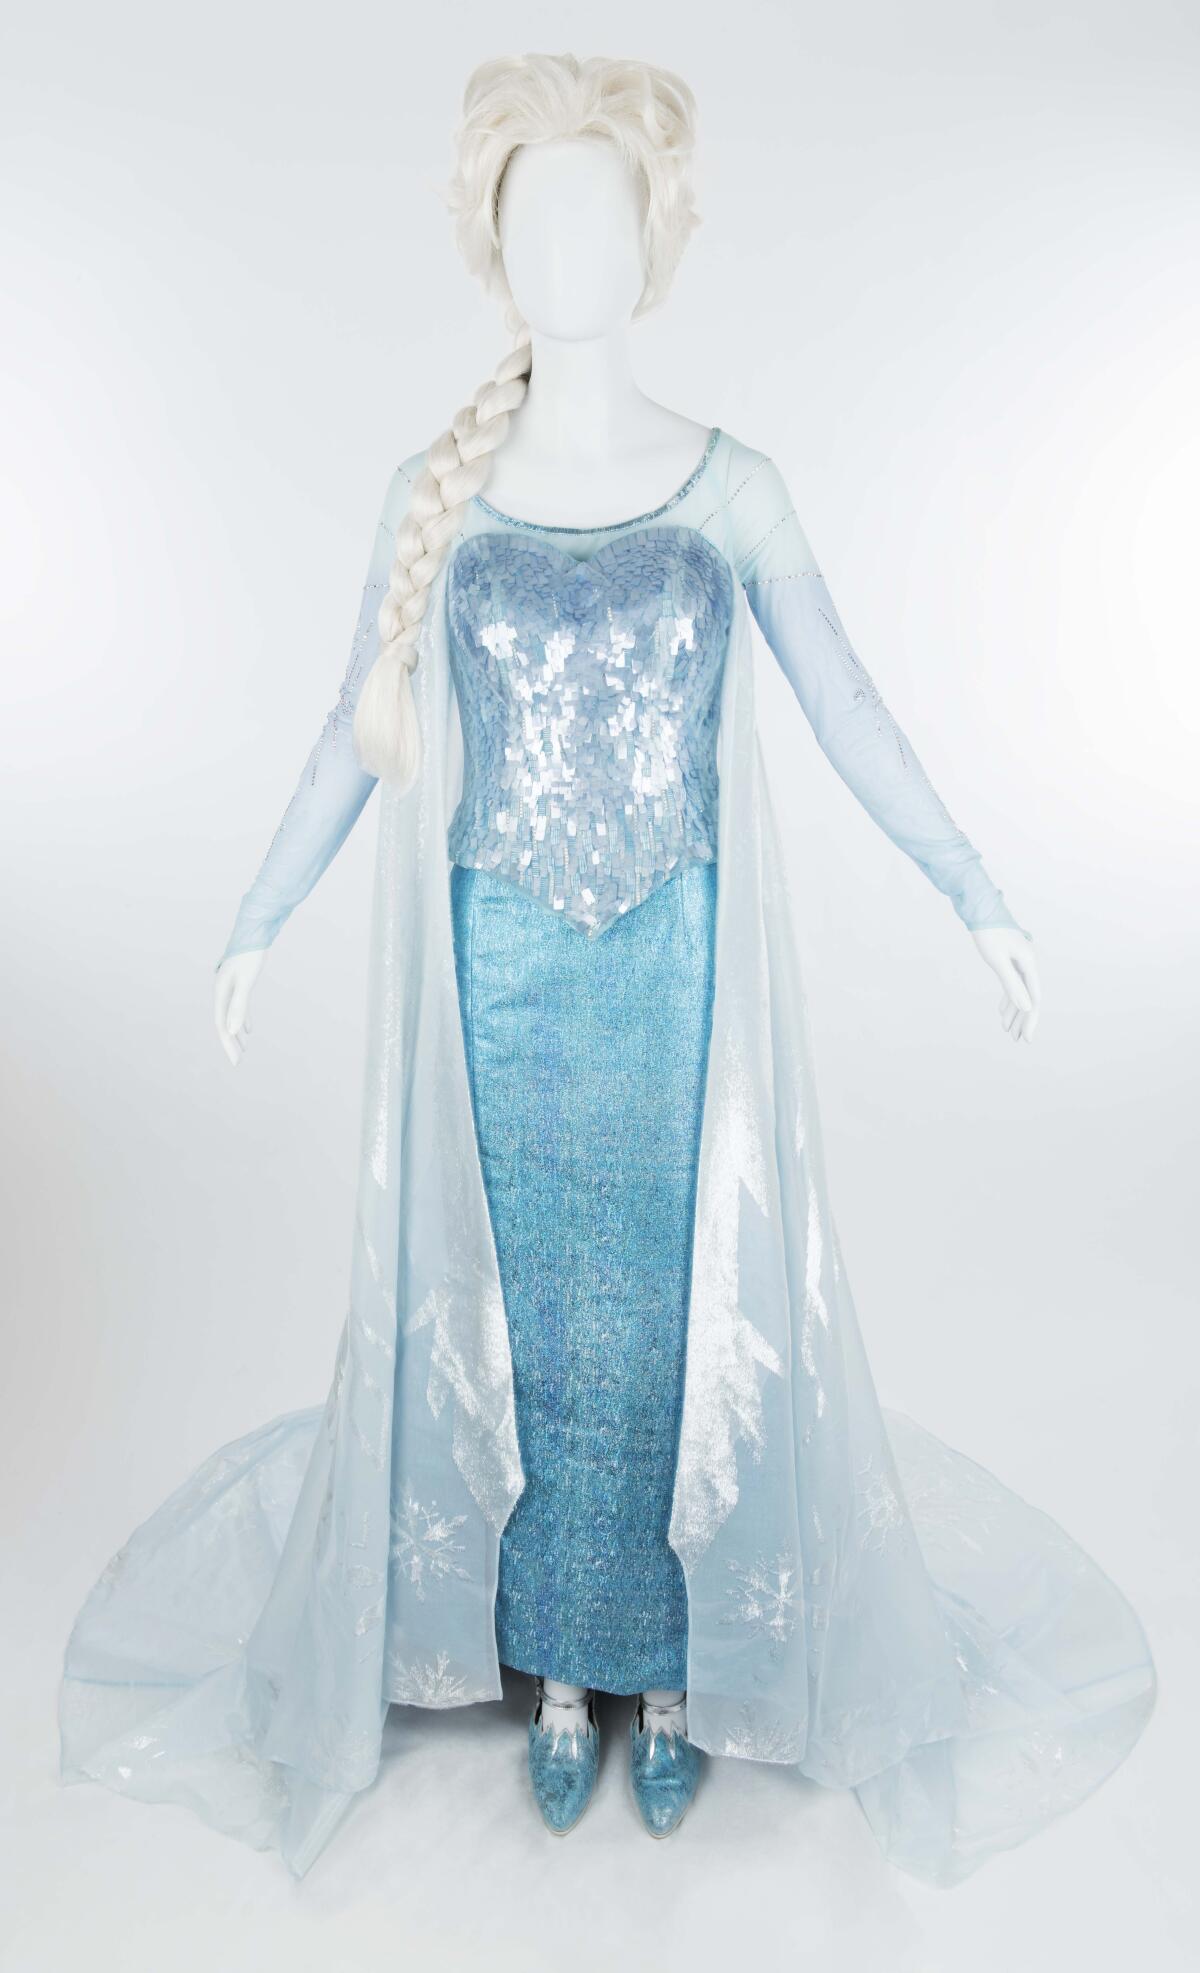 An Elsa park costume from the Walt Disney World Resort